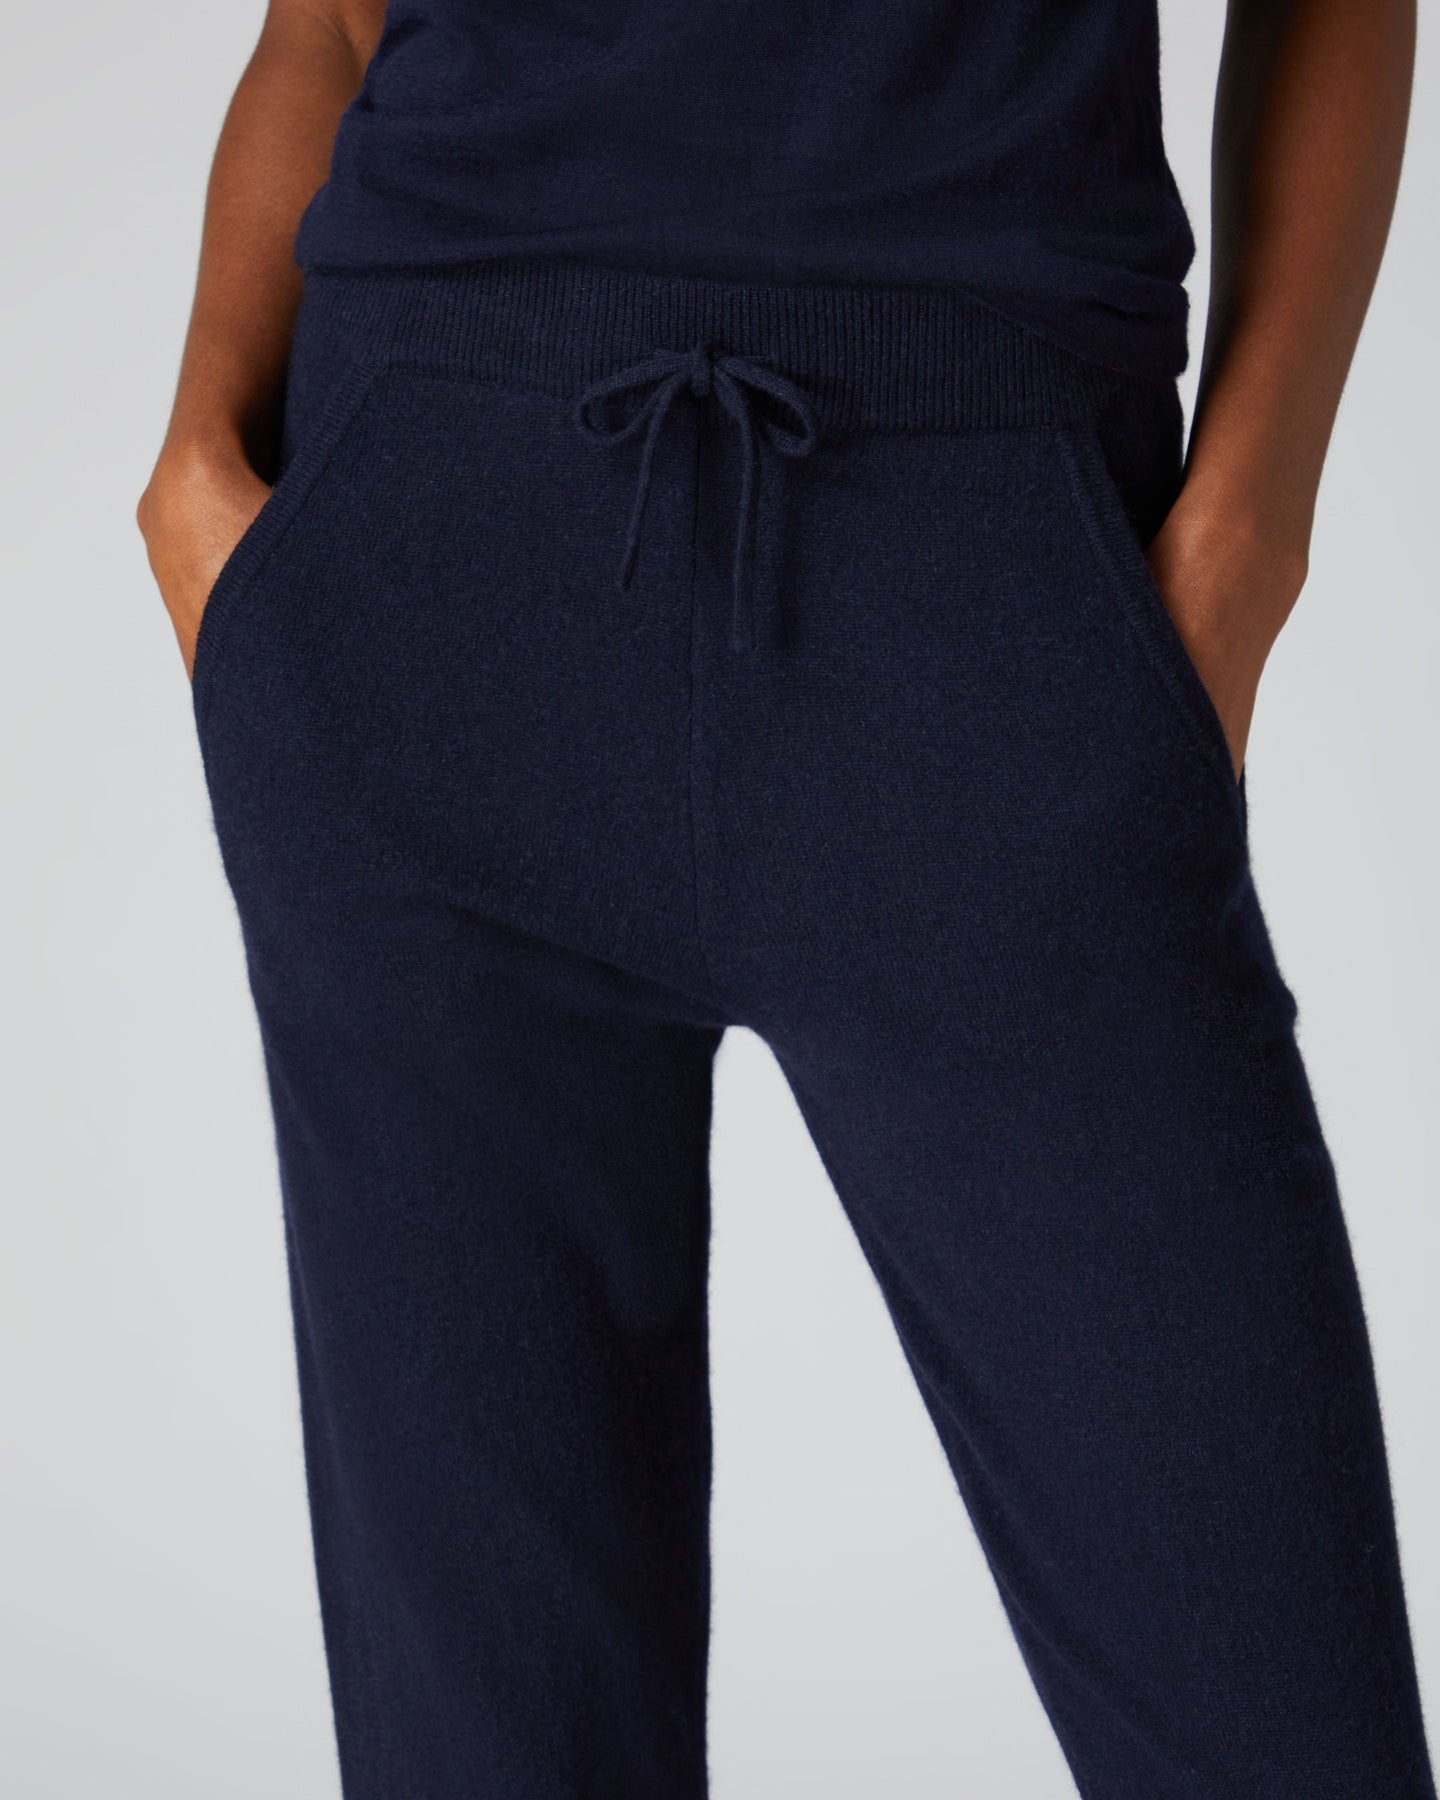 Cashmere Boutique: 100% Pure Cashmere Lounge and Pajama Set for Women  (Color: Black, Size: Small/Medium) at Amazon Women's Clothing store: Women  S Cashmere Pants